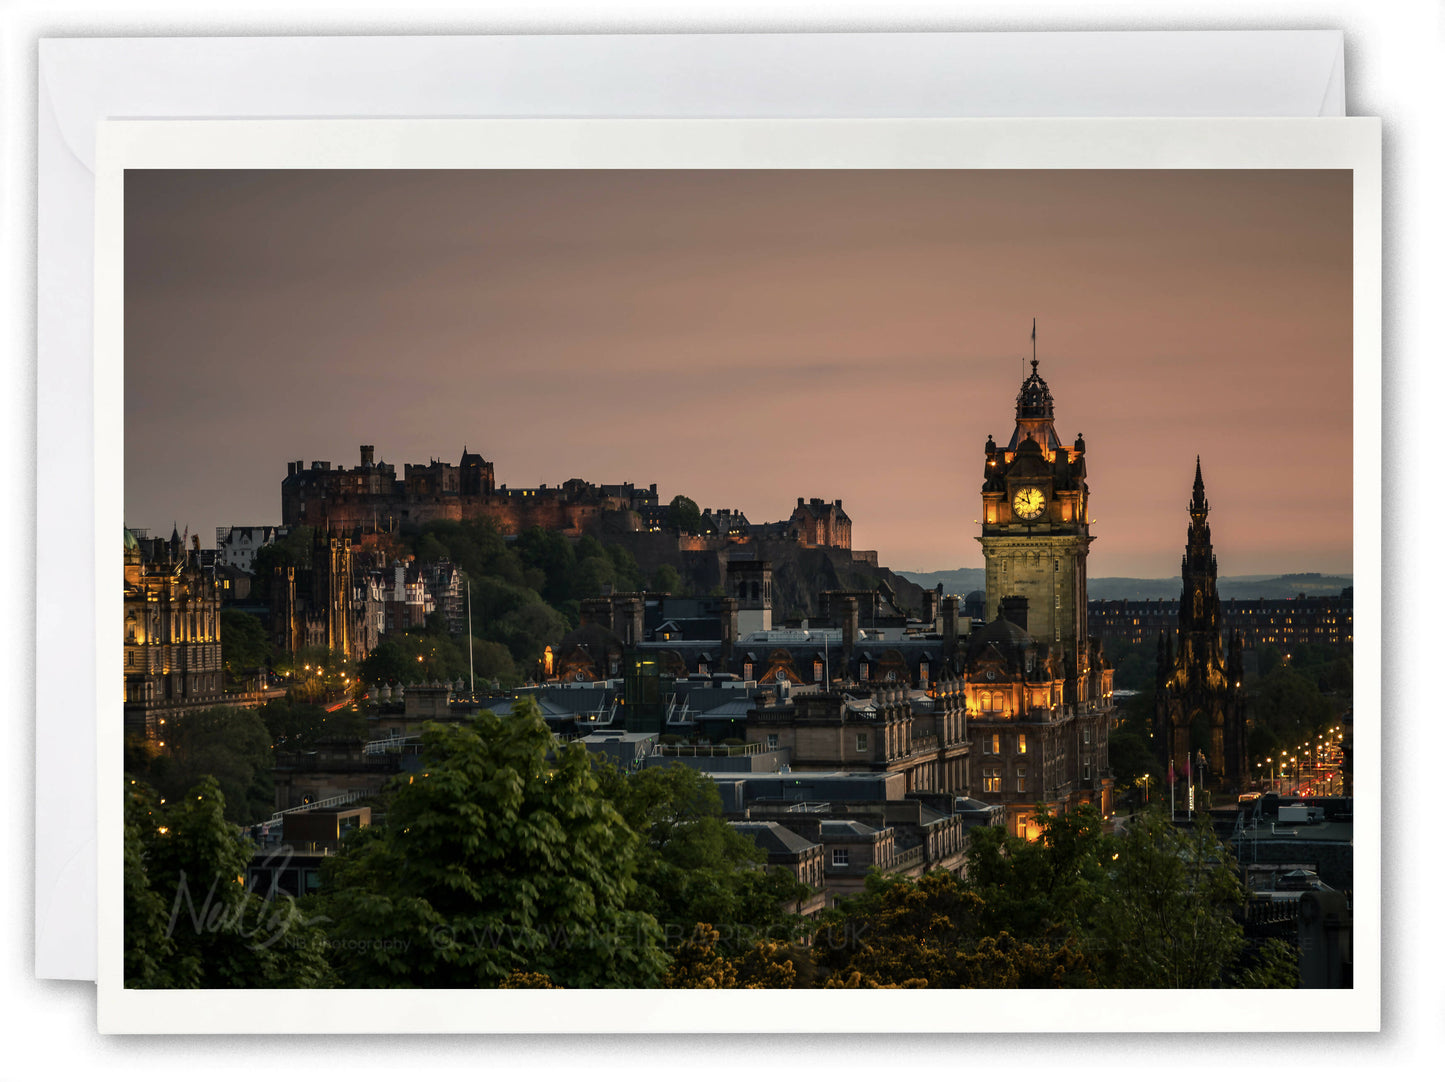 Edinburgh Castle from Calton Hill - Scotland Greeting Card - Blank Inside